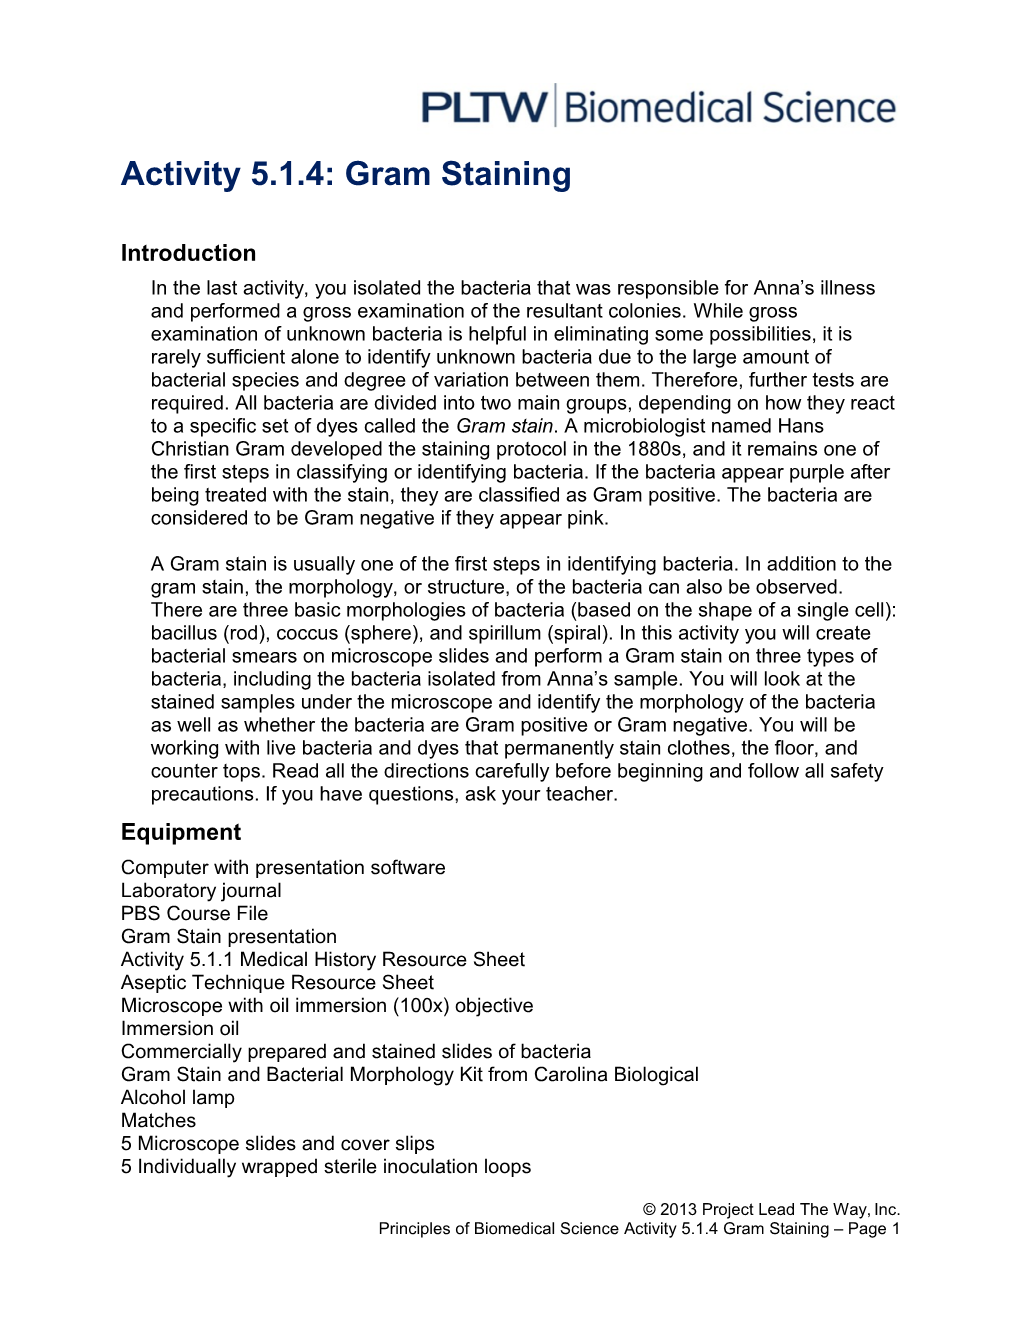 Activity 5.1.4: Gram Staining